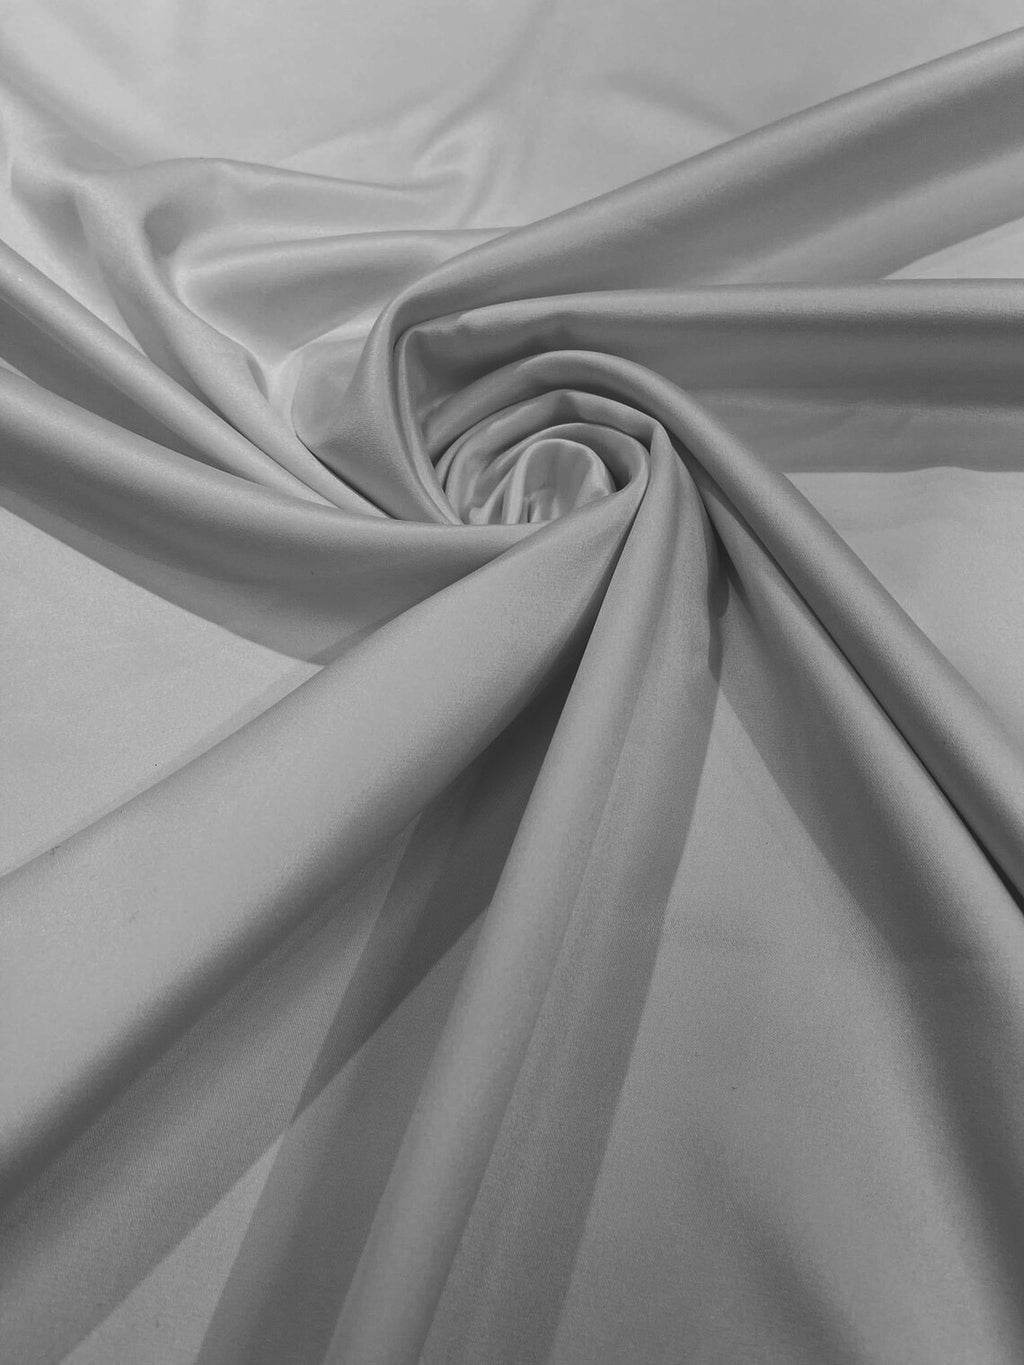 Satin Stretch Silky Fabric - 60 Light Weight Stretch Satin Silky Fabric  For Fashion, Decor By Yard